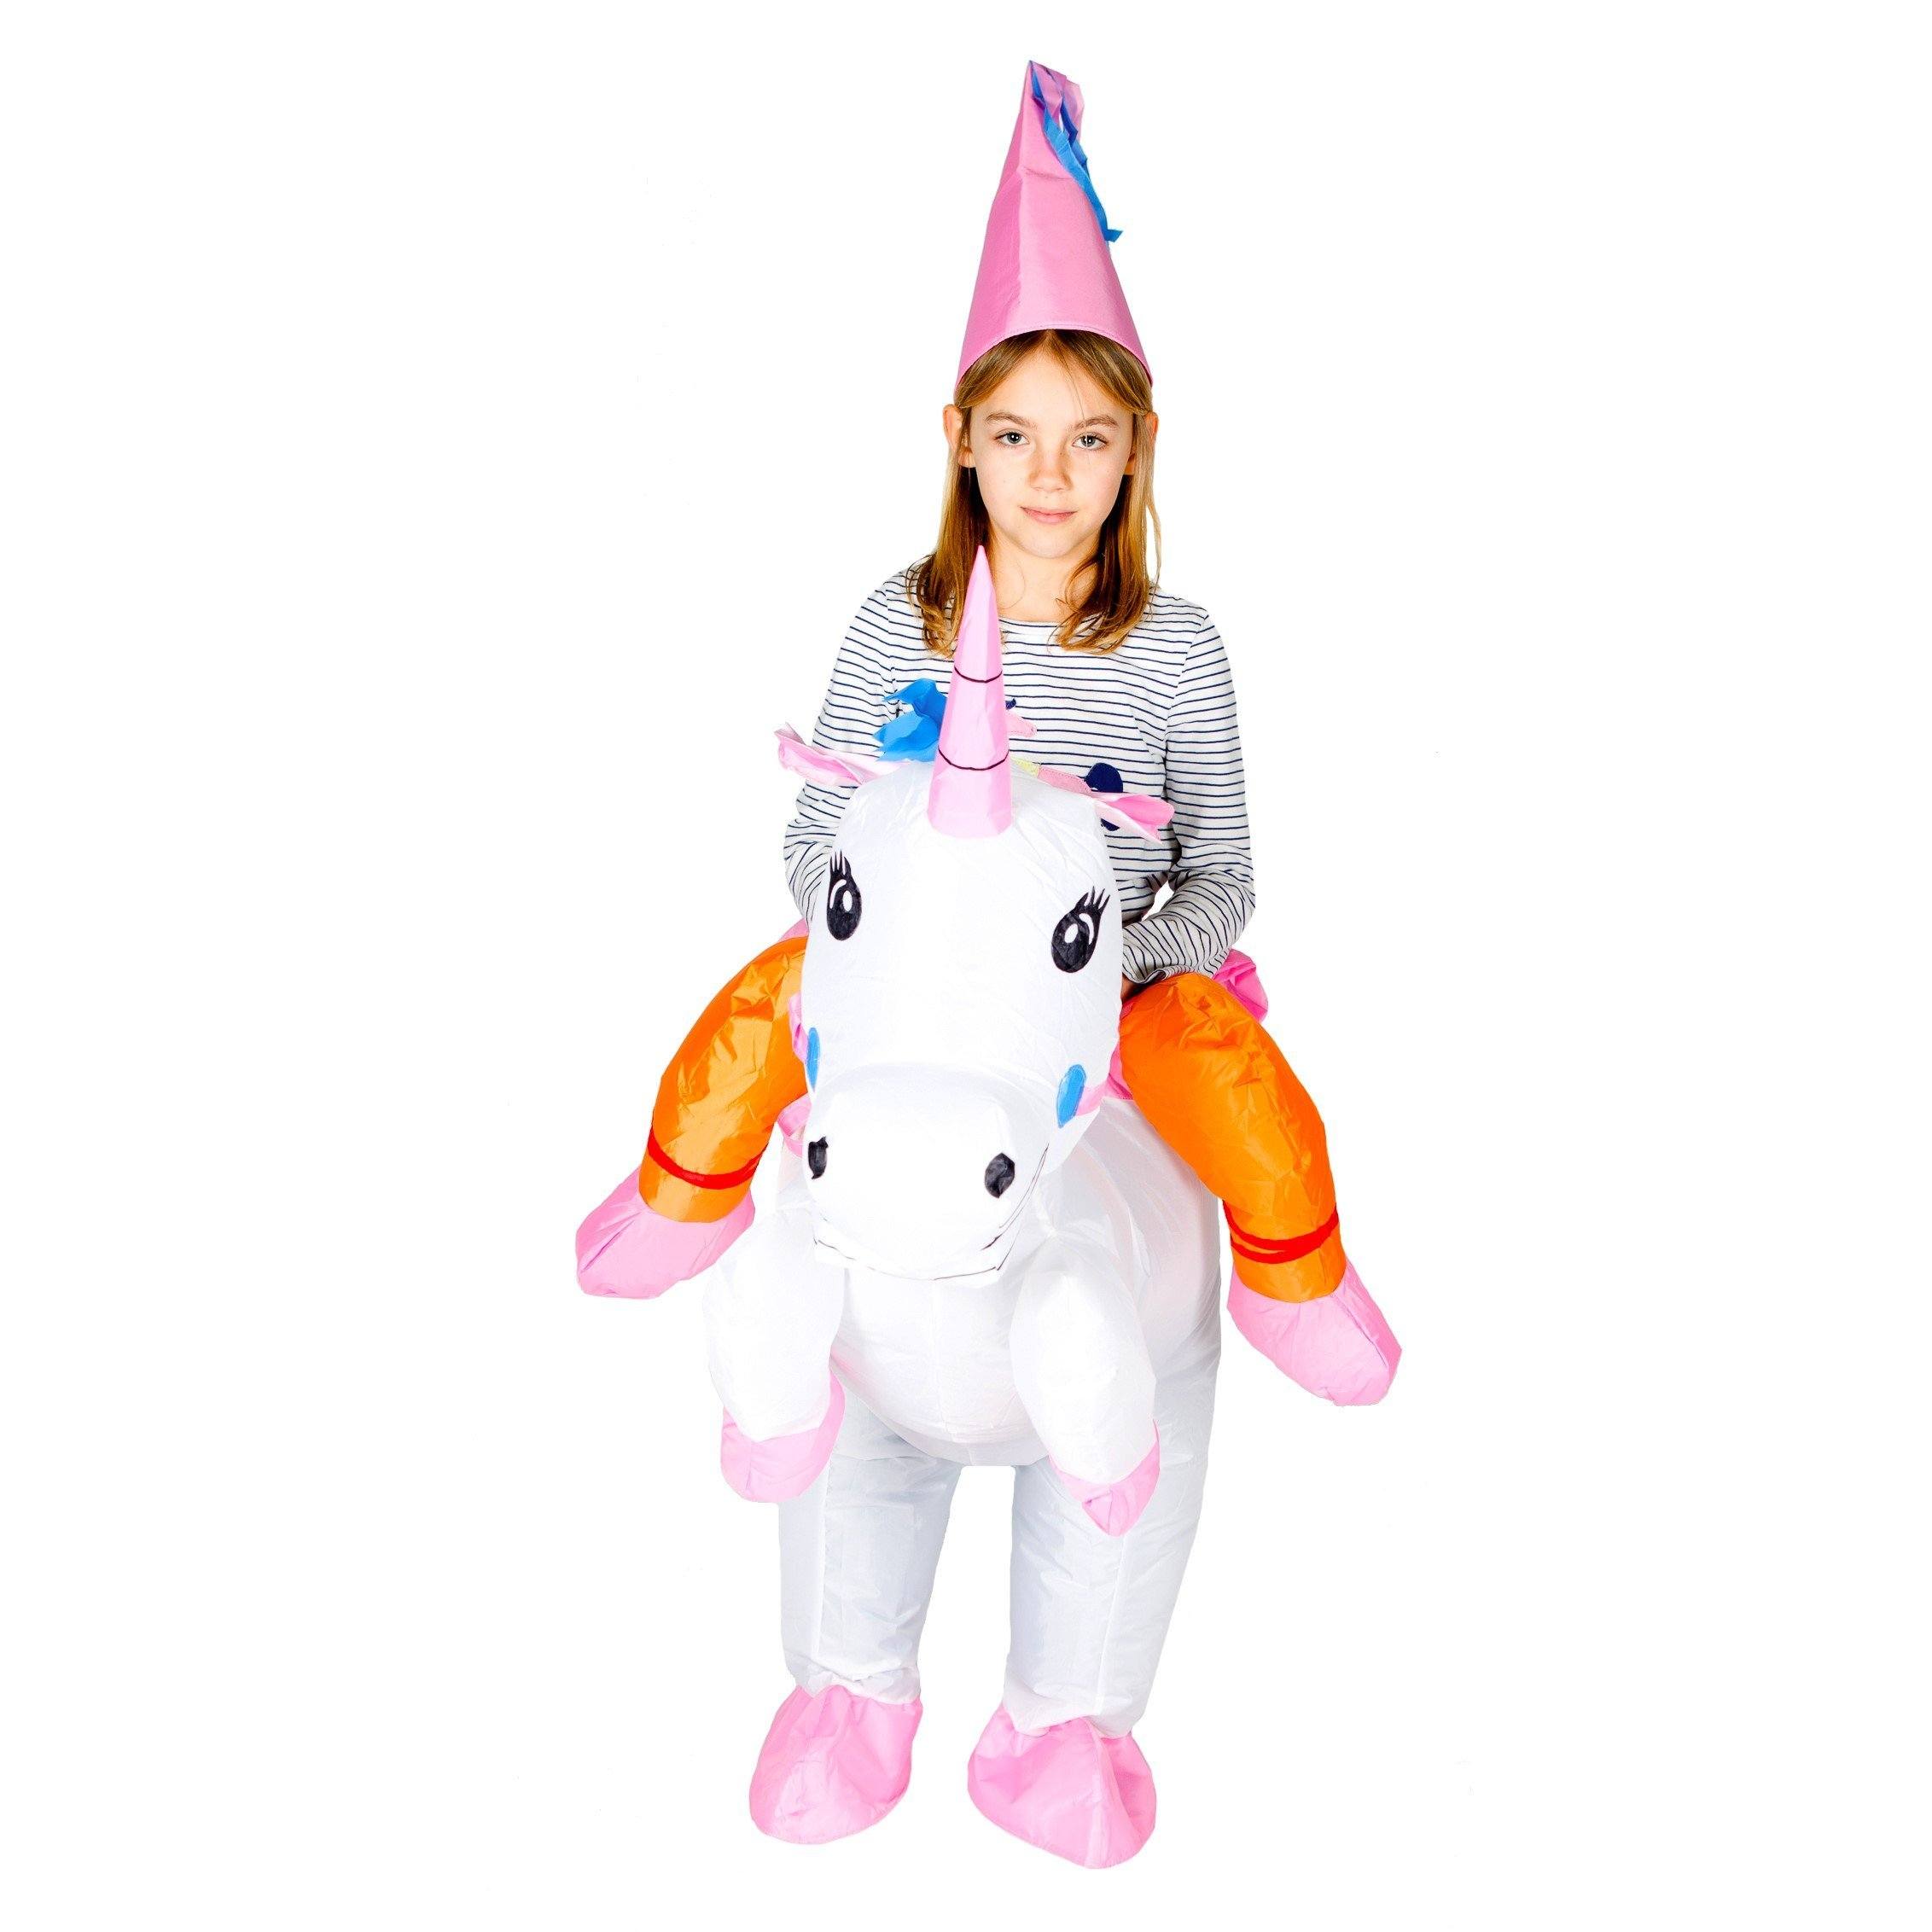 Fancy Dress - Kids Inflatable Unicorn Costume